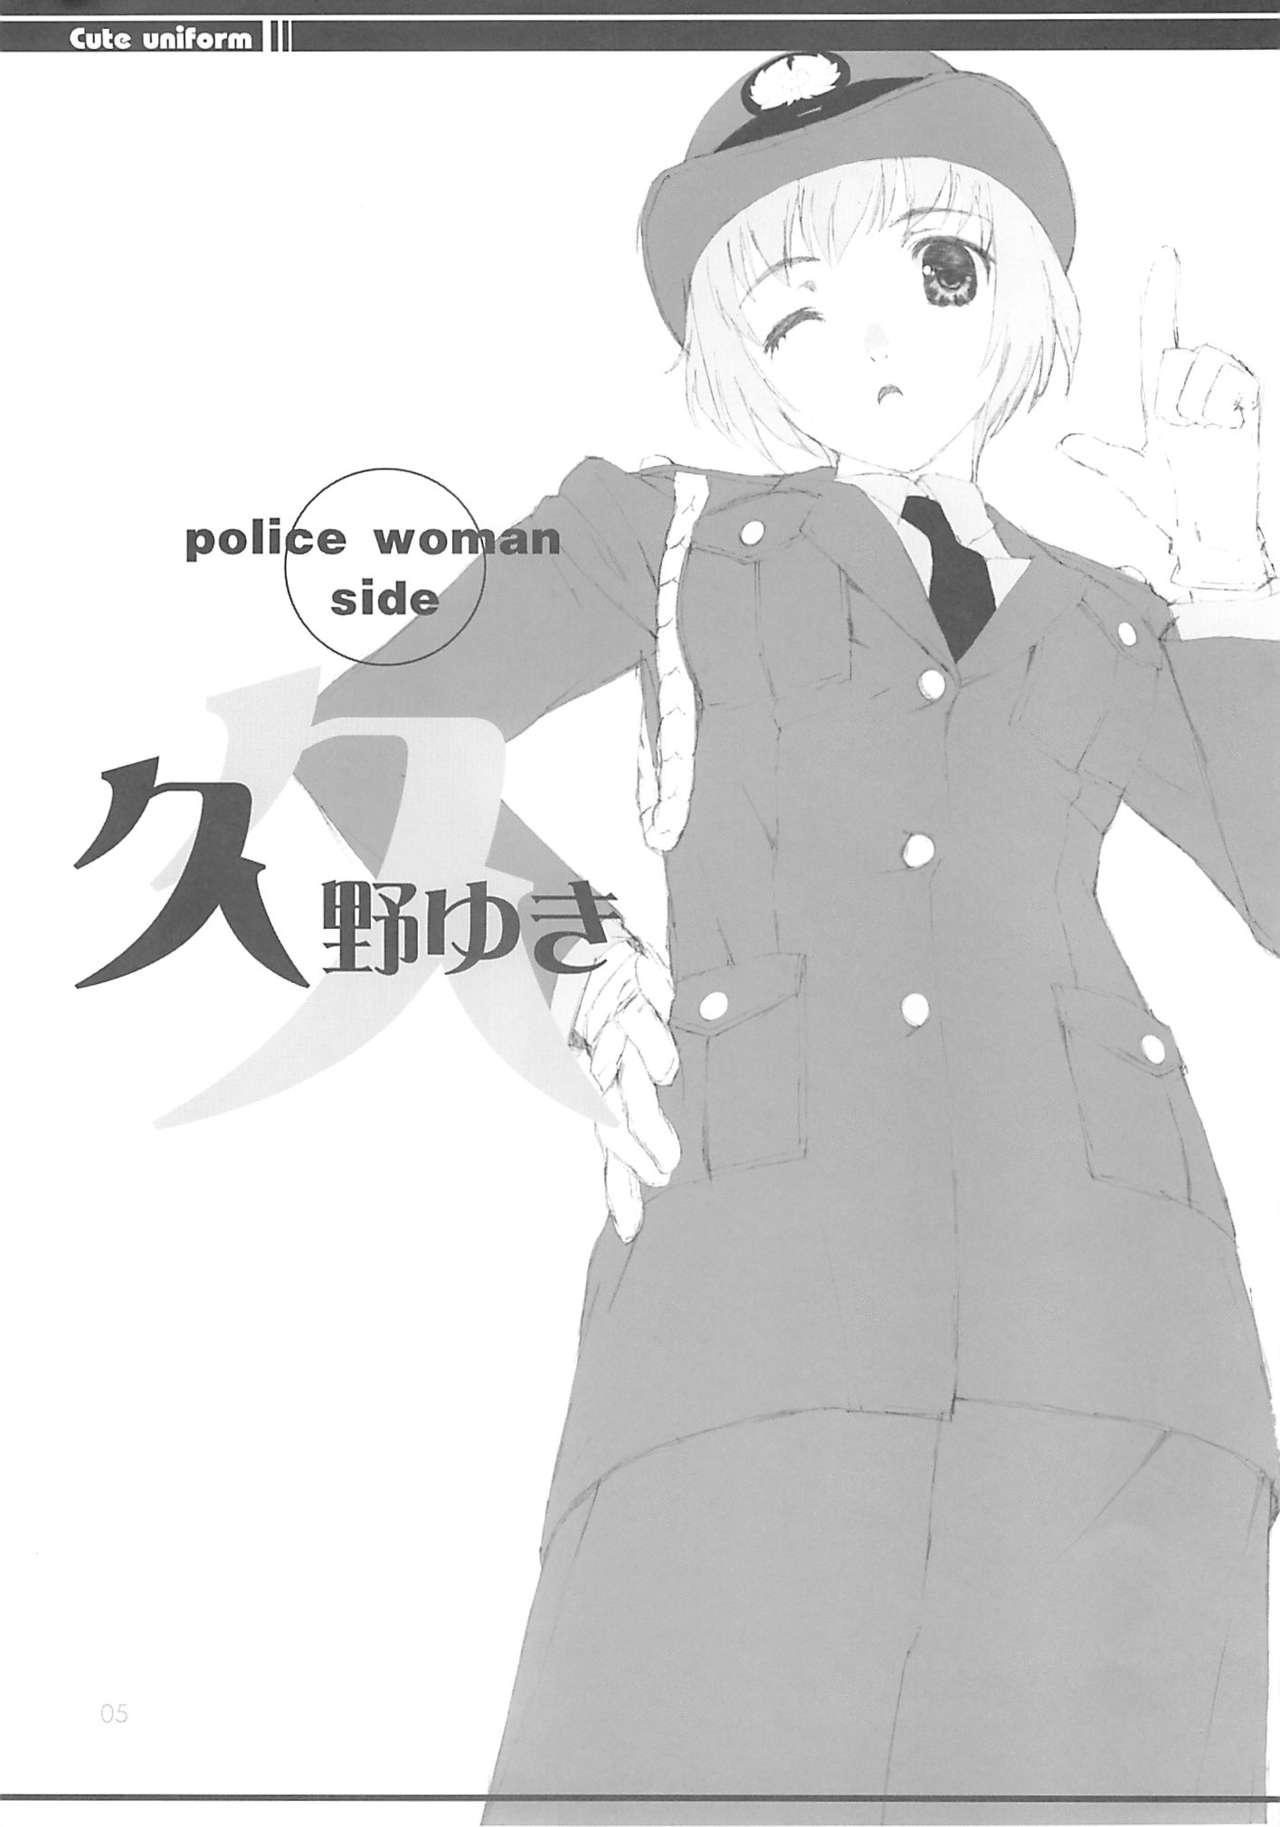 [Lily Lily Rose] cute uniform vol.02 (Original) 